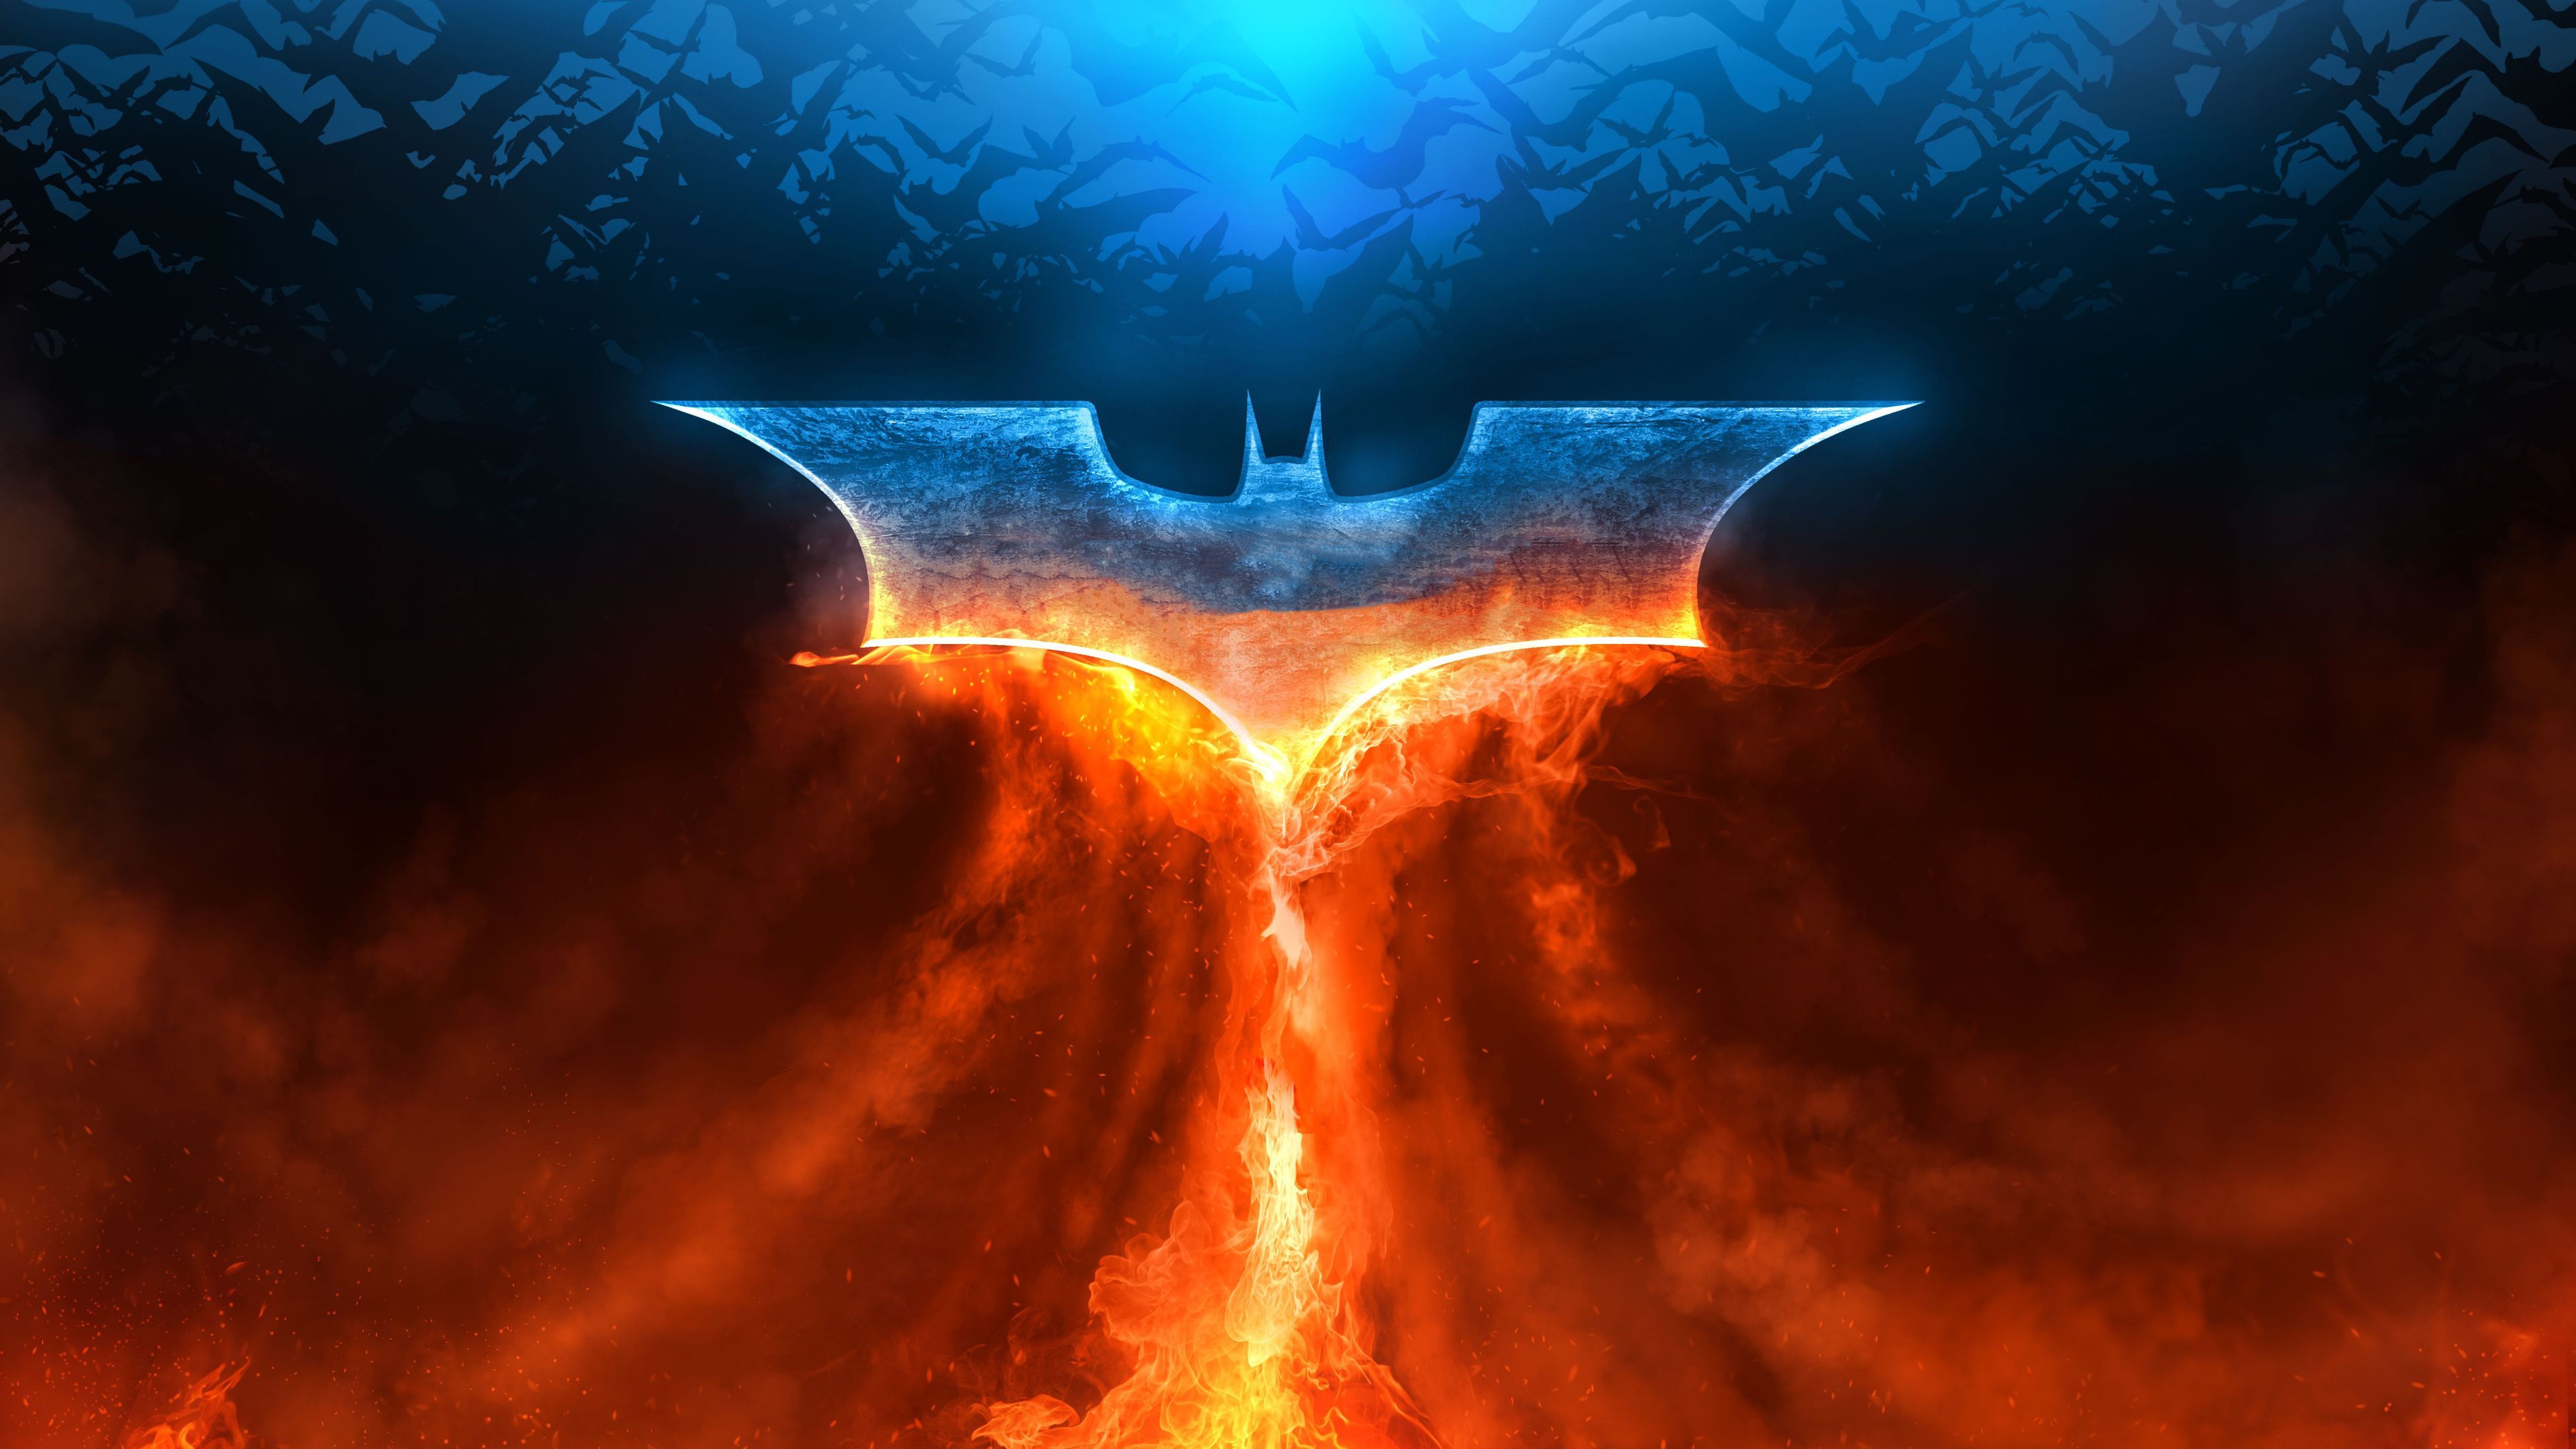 Batman Fire Rise Logo 4k superheroes wallpaper, logo wallpaper, hd- wallpaper, batman wallpaper, 5k wal. Batman wallpaper, Creative graphics, Logo wallpaper hd